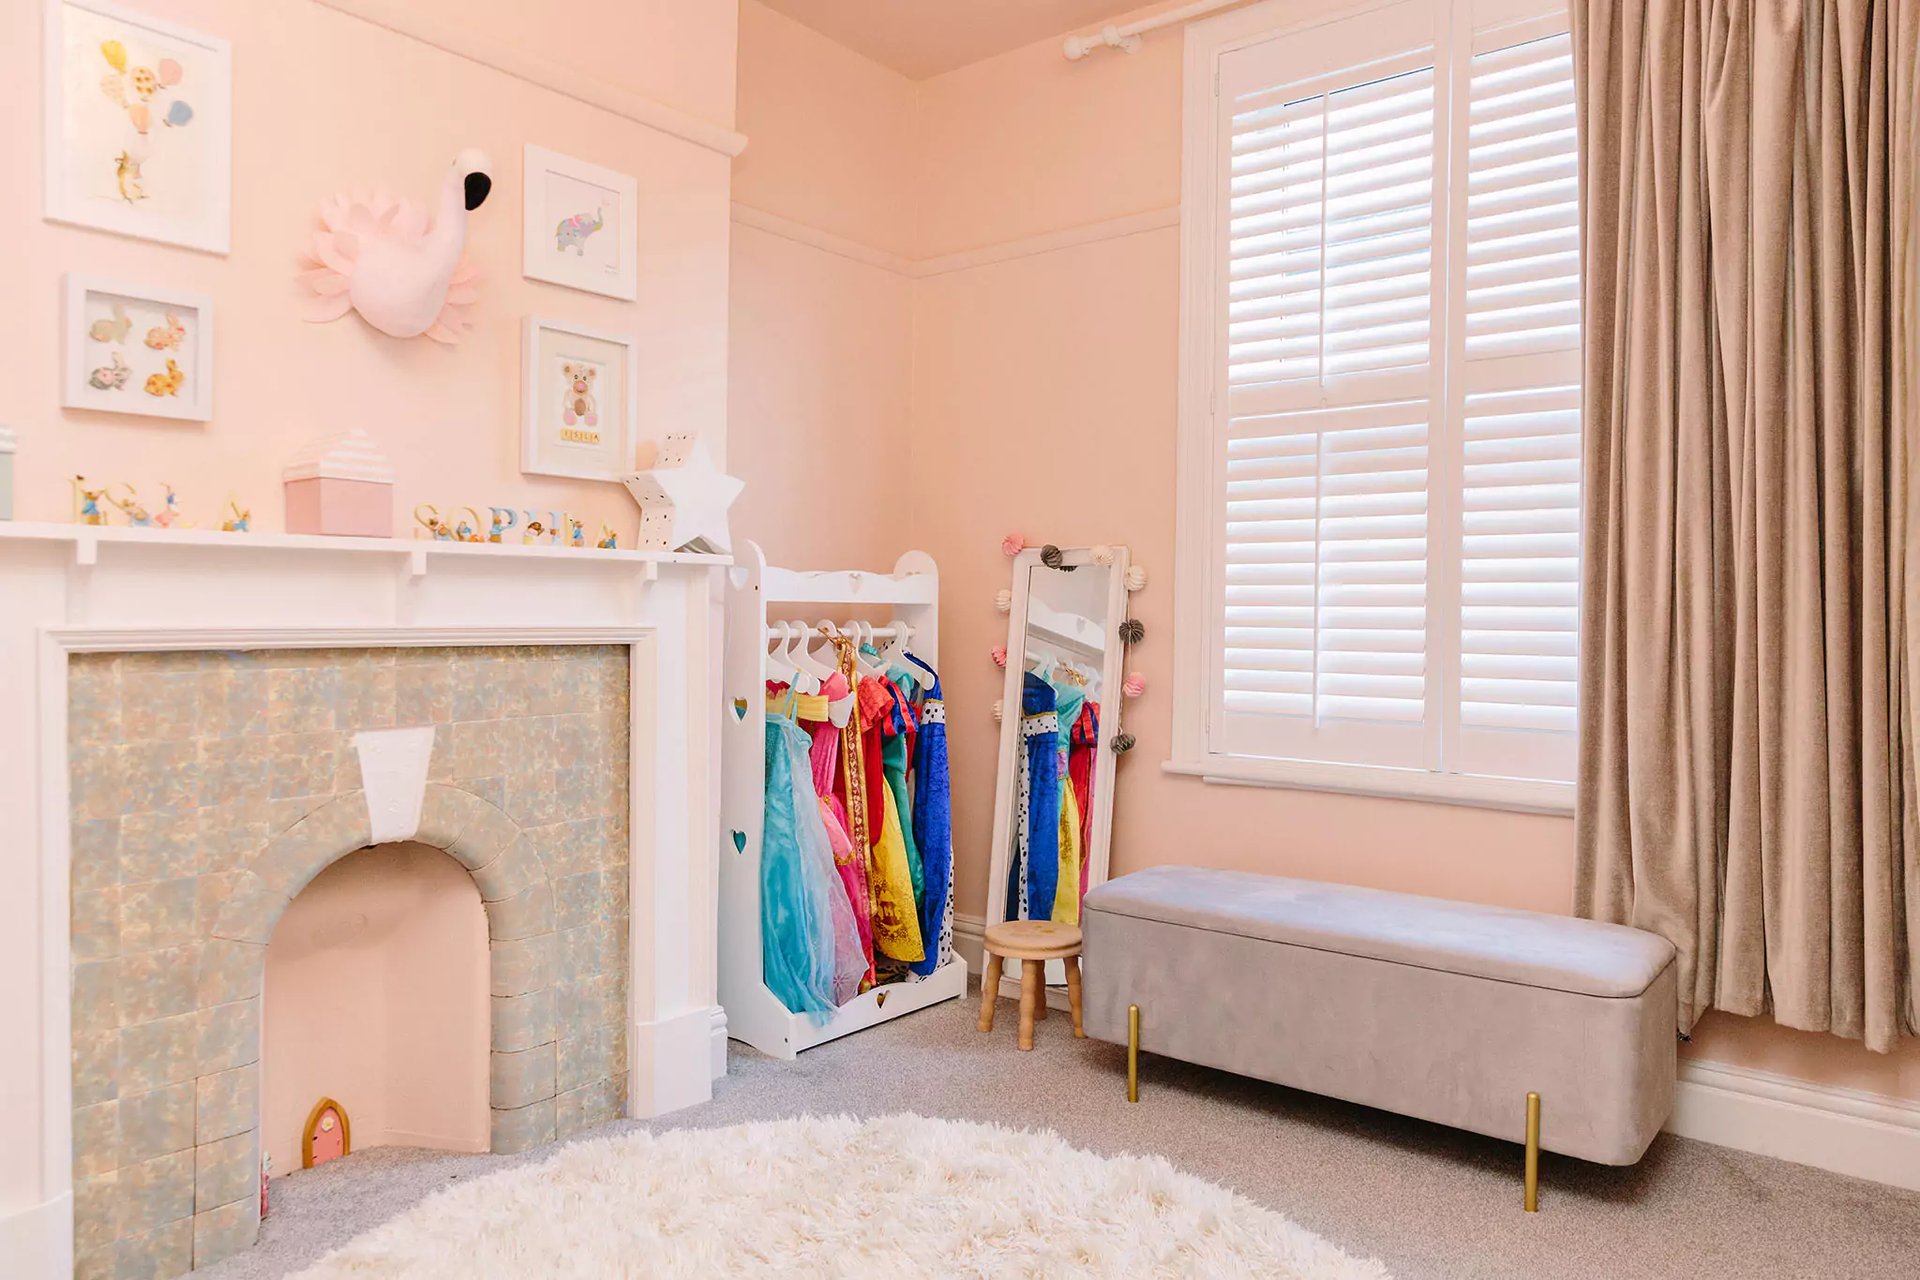 Fancy dress areas for kids bedroom | Budget childrens bedroom ideas